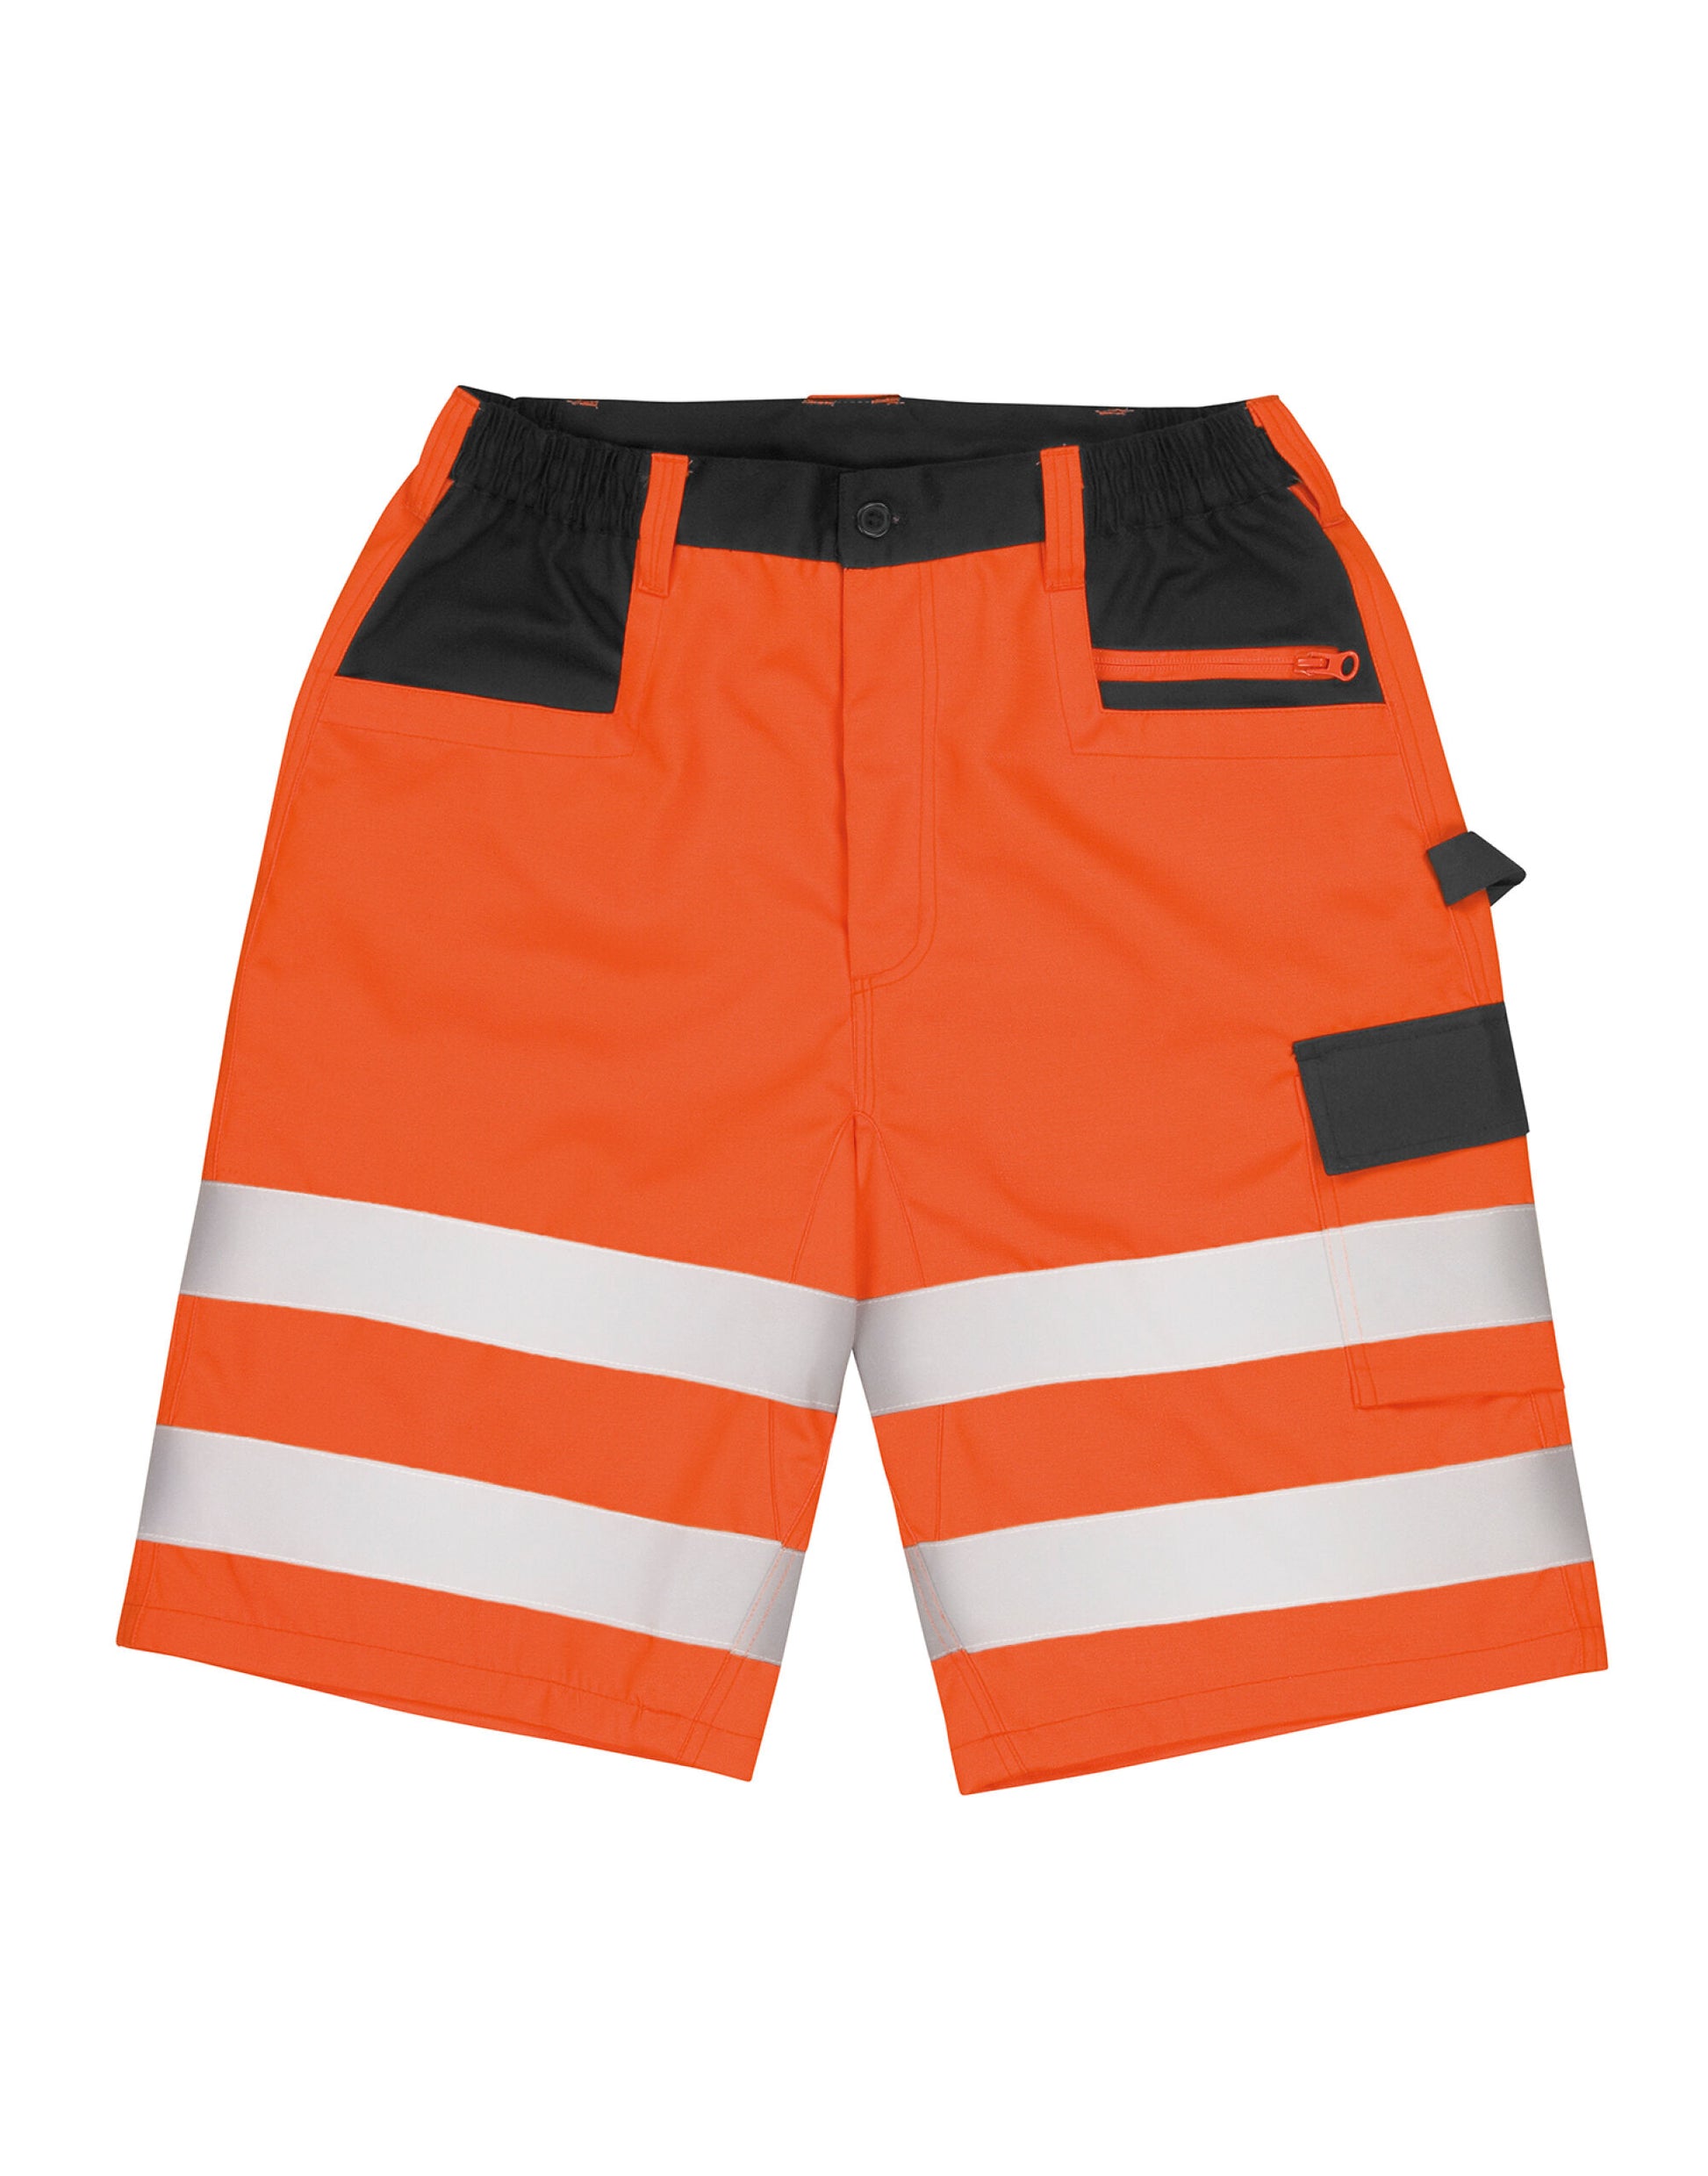 Result Safeguard Safety Cargo Shorts